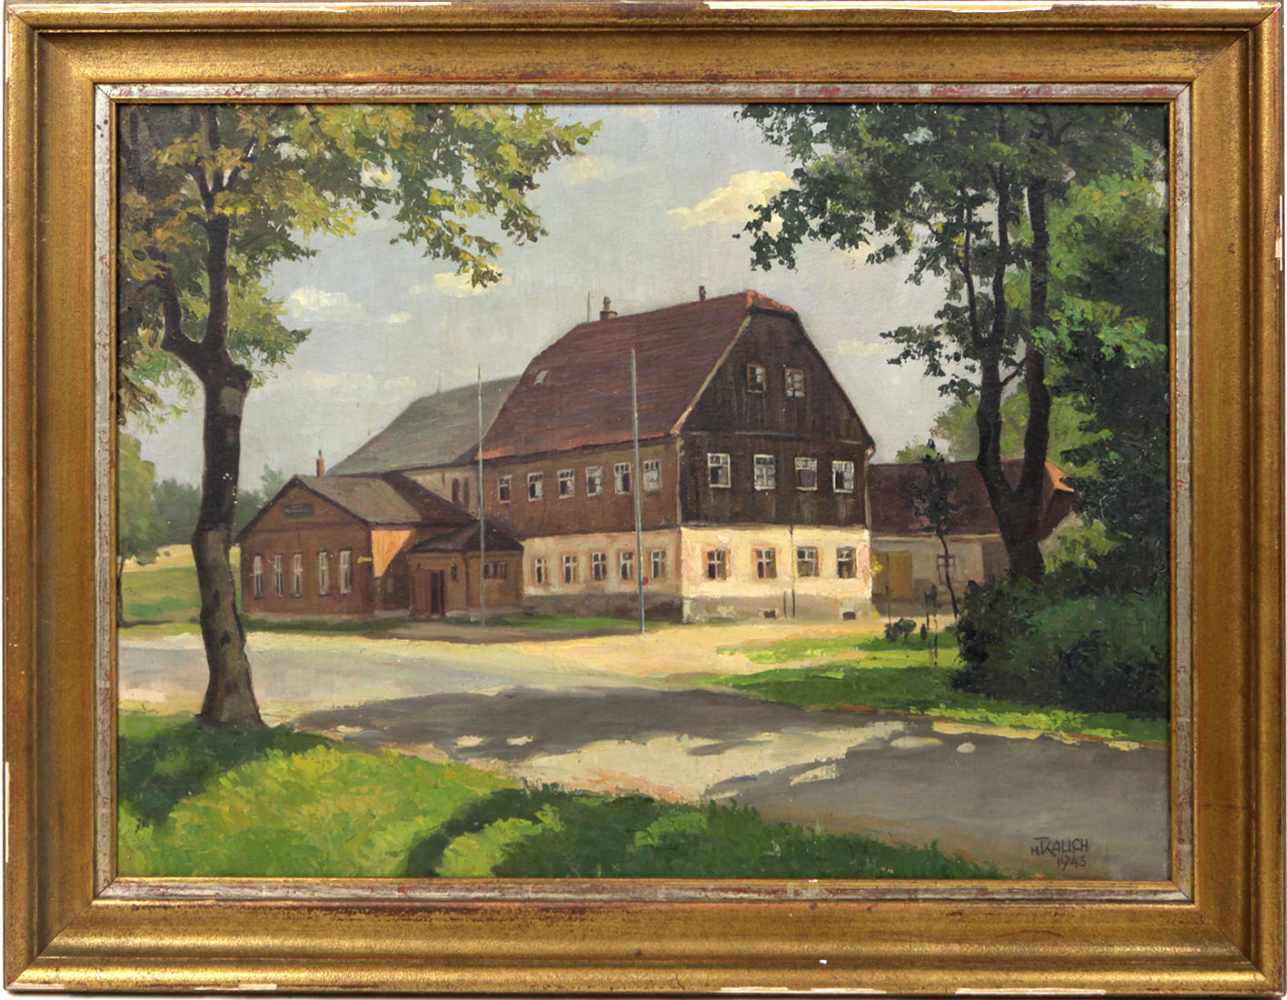 Gaststätte bei Freiberg - Kauch, H. 1946 Öl/Lwd rechts unten signiert H. Kauch sowie datiert 1946,